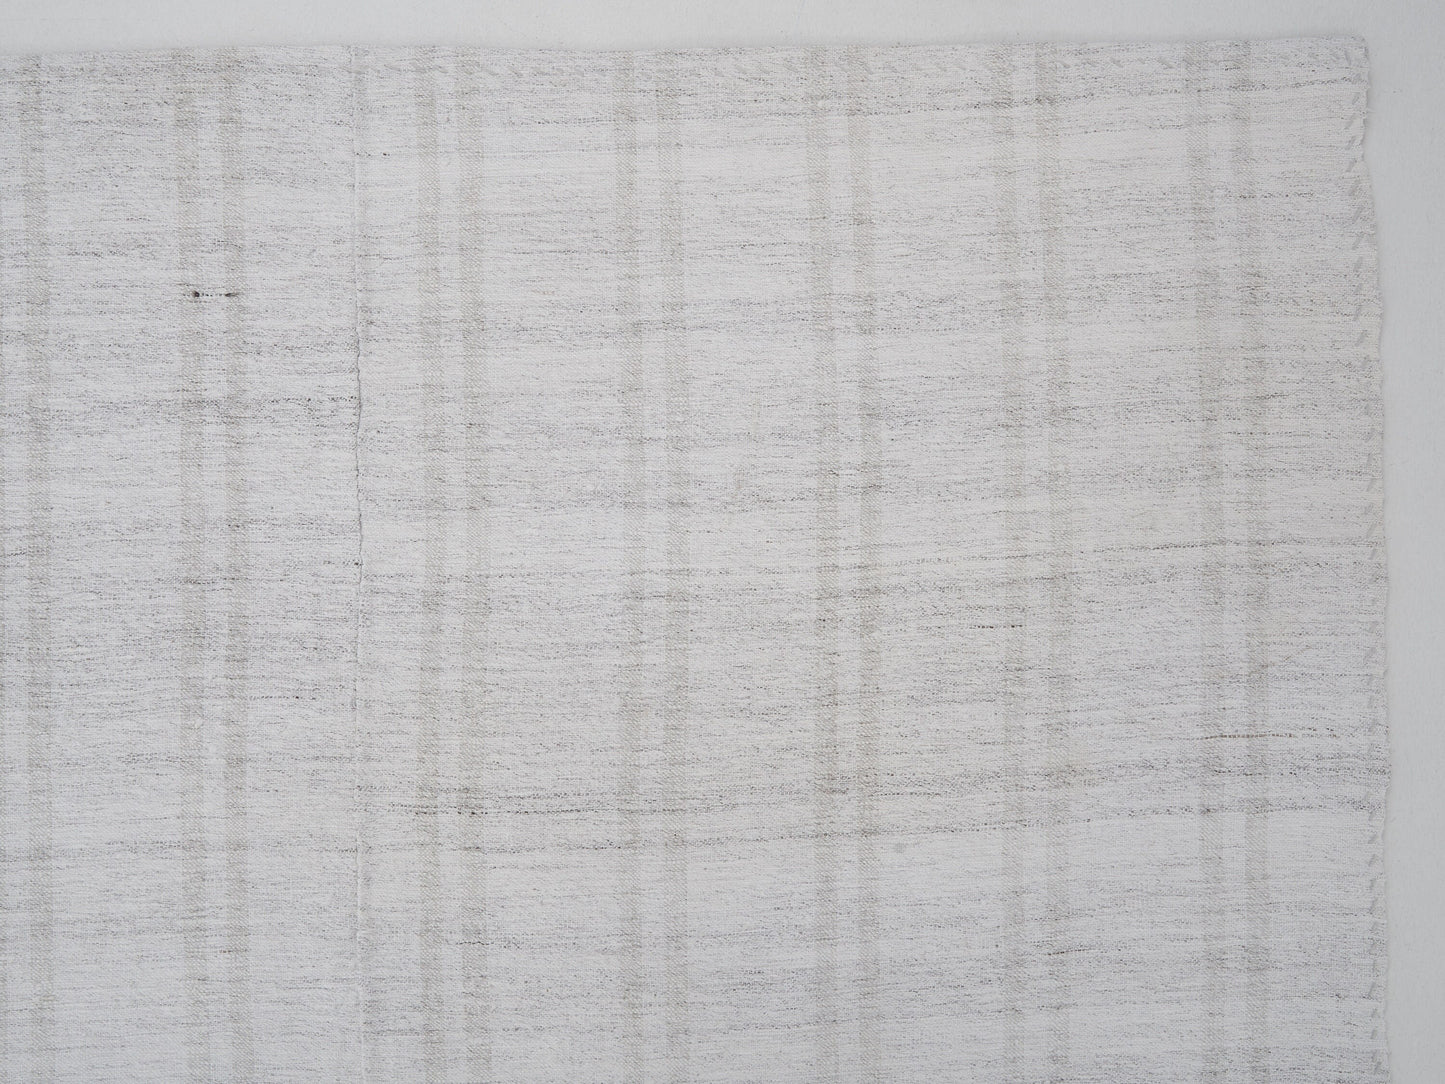 White Turkish Kilim Rug, Vintage Flat Weave Striped Kilim Rug, Handmade Scandinavian Kilim Rug, Neutral Muted Kilim Rug, Kilim Rug 6x9, 9912